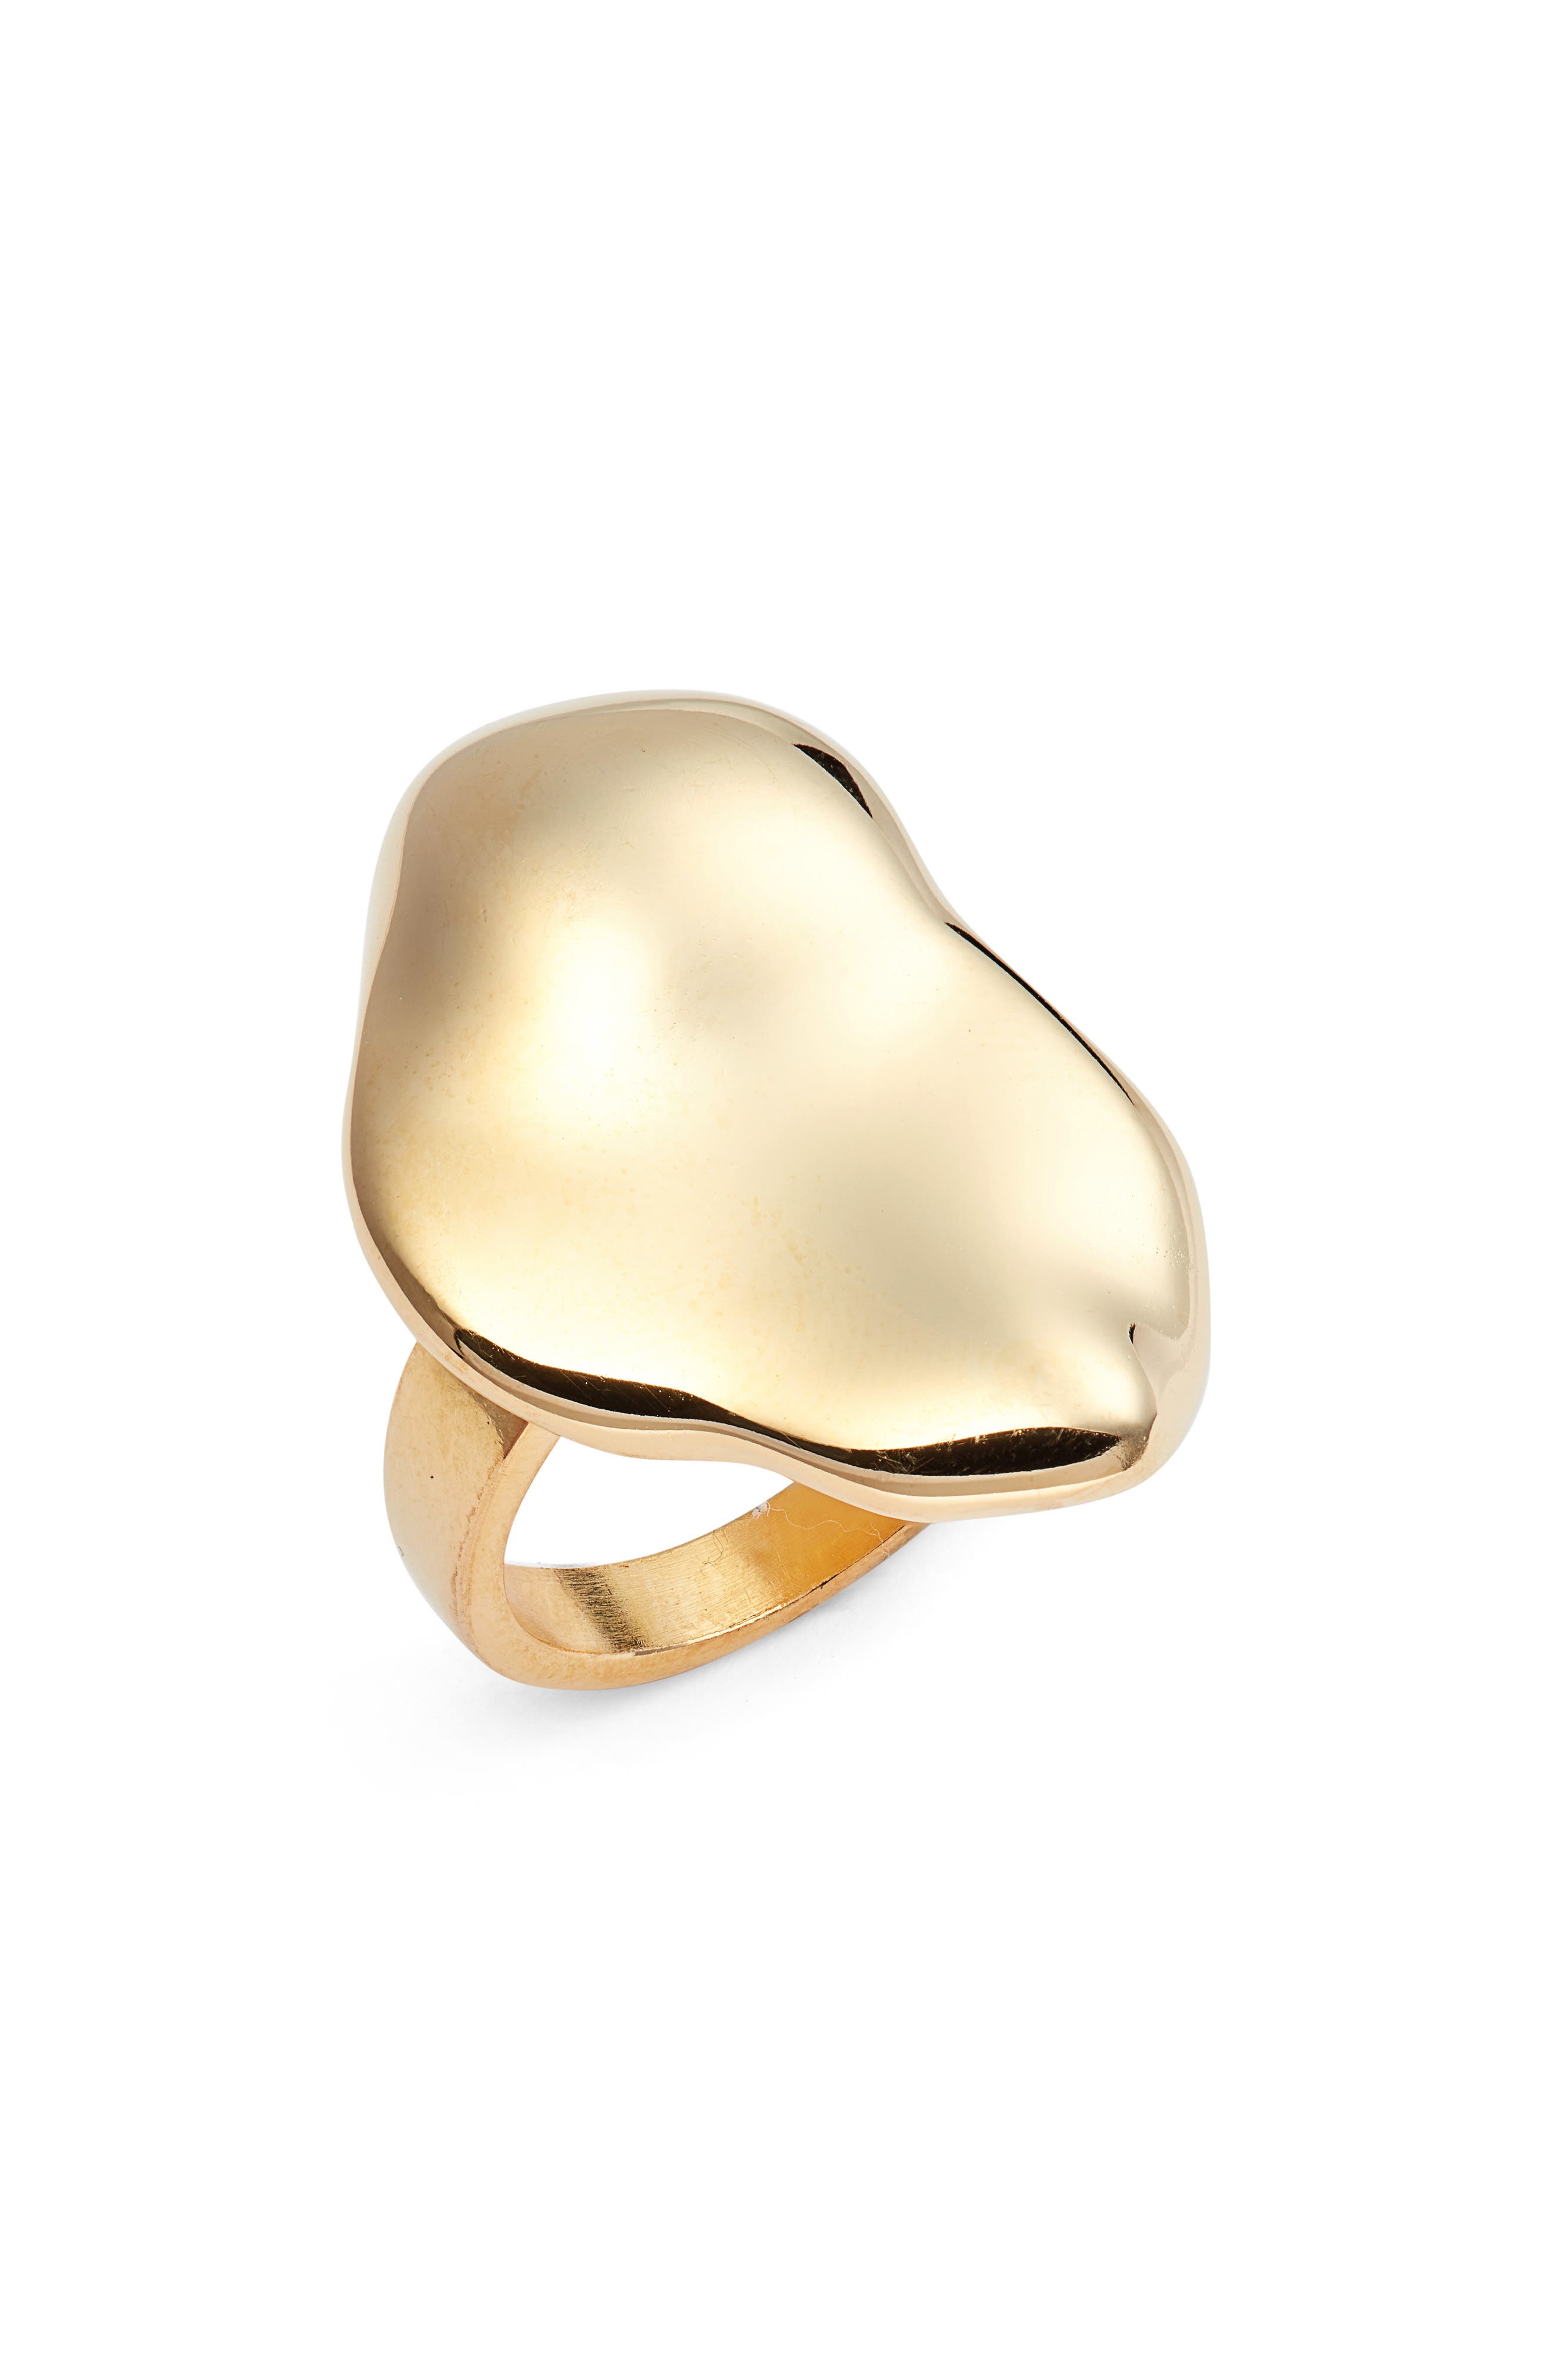 BIKO Molten Ring in Gold at Nordstrom